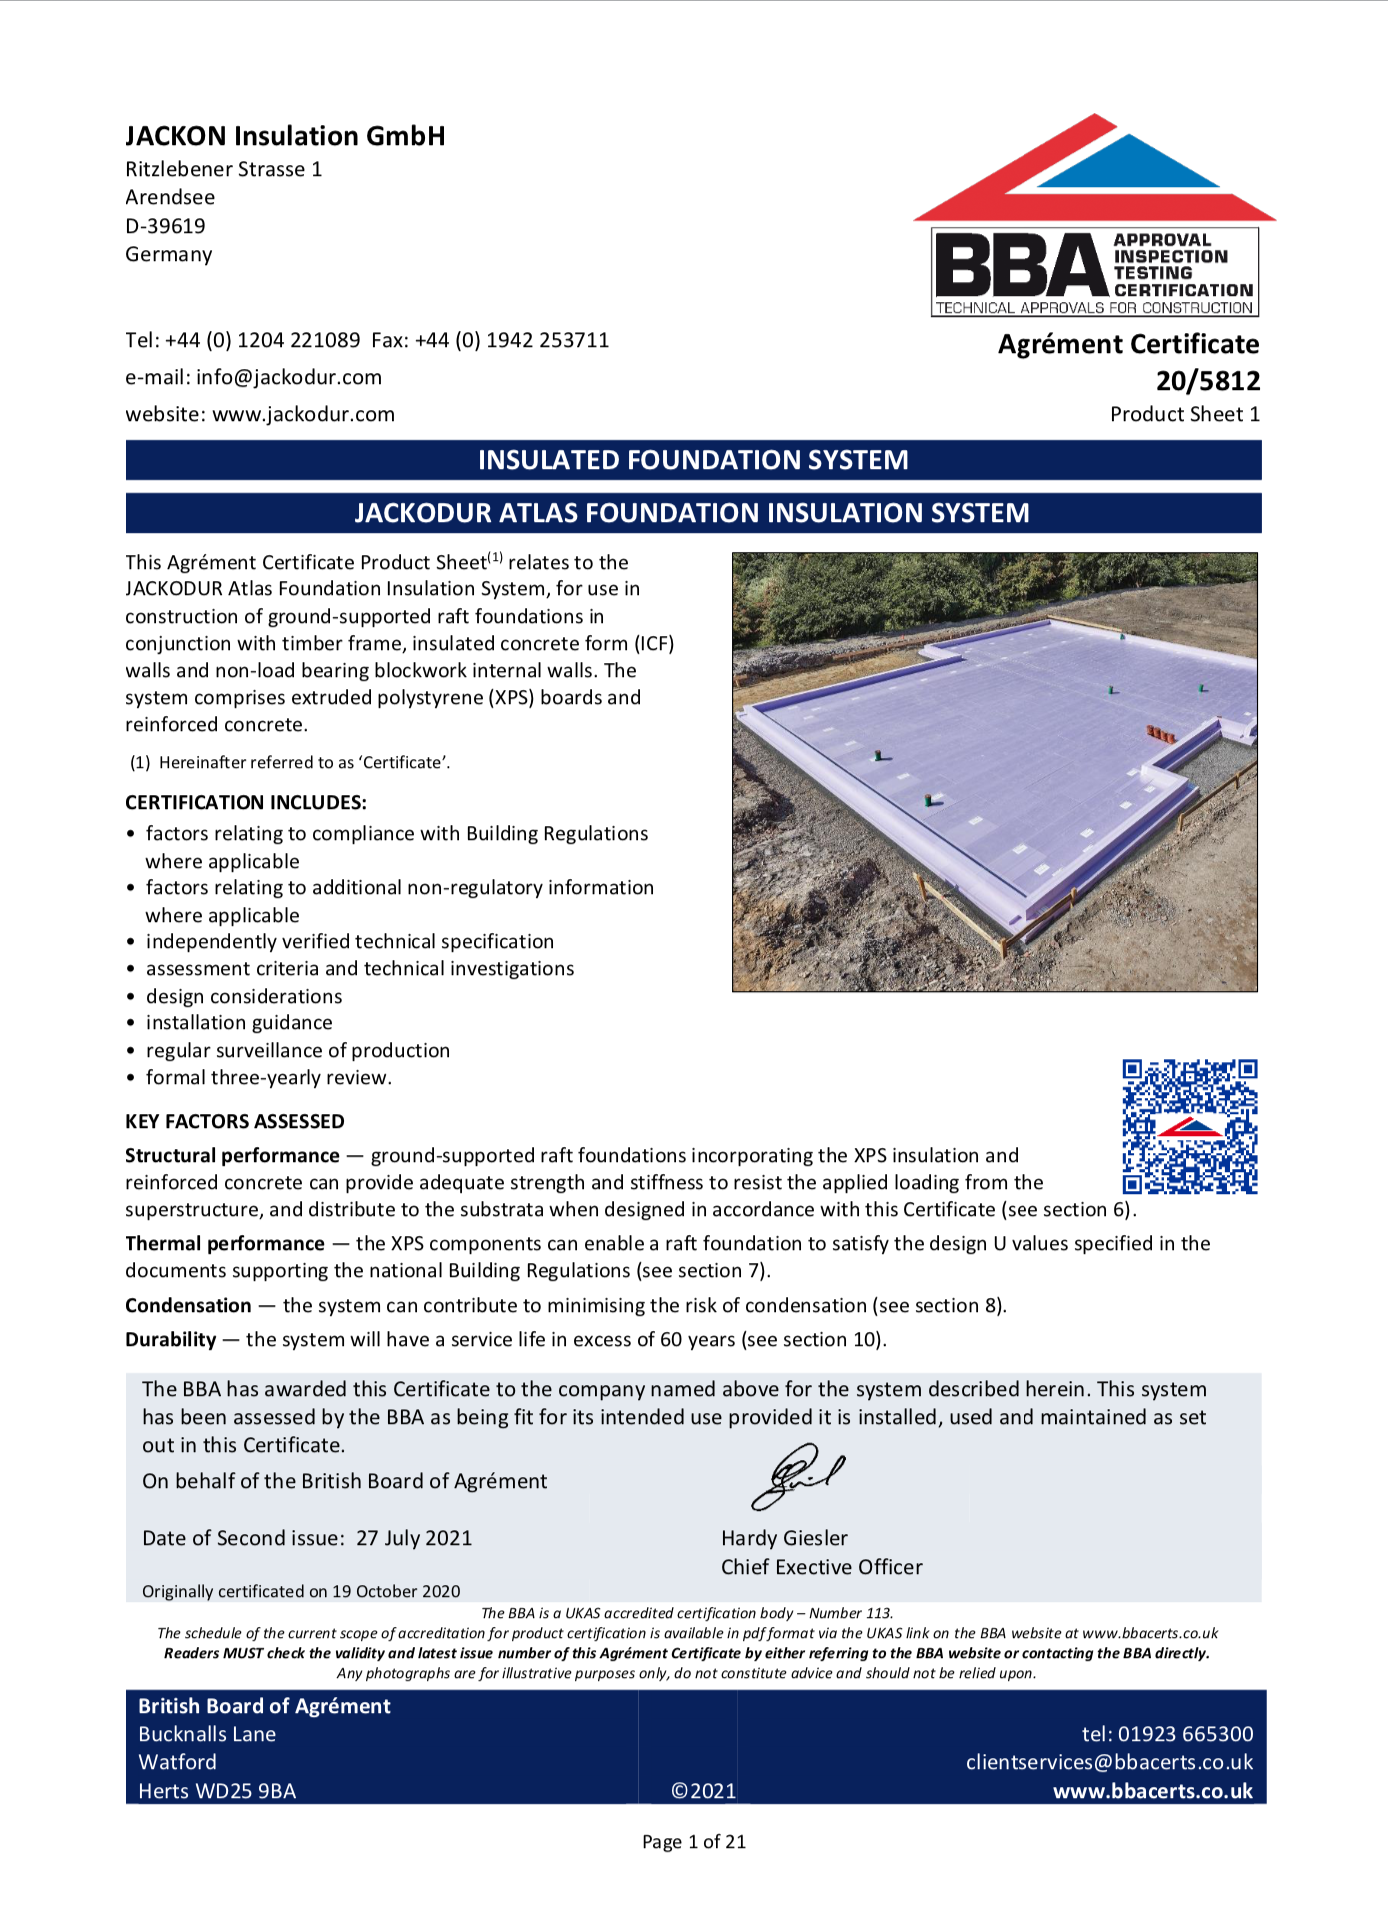 BBA Certificate 20-5812 – JACKODUR ATLAS Insulated Slab